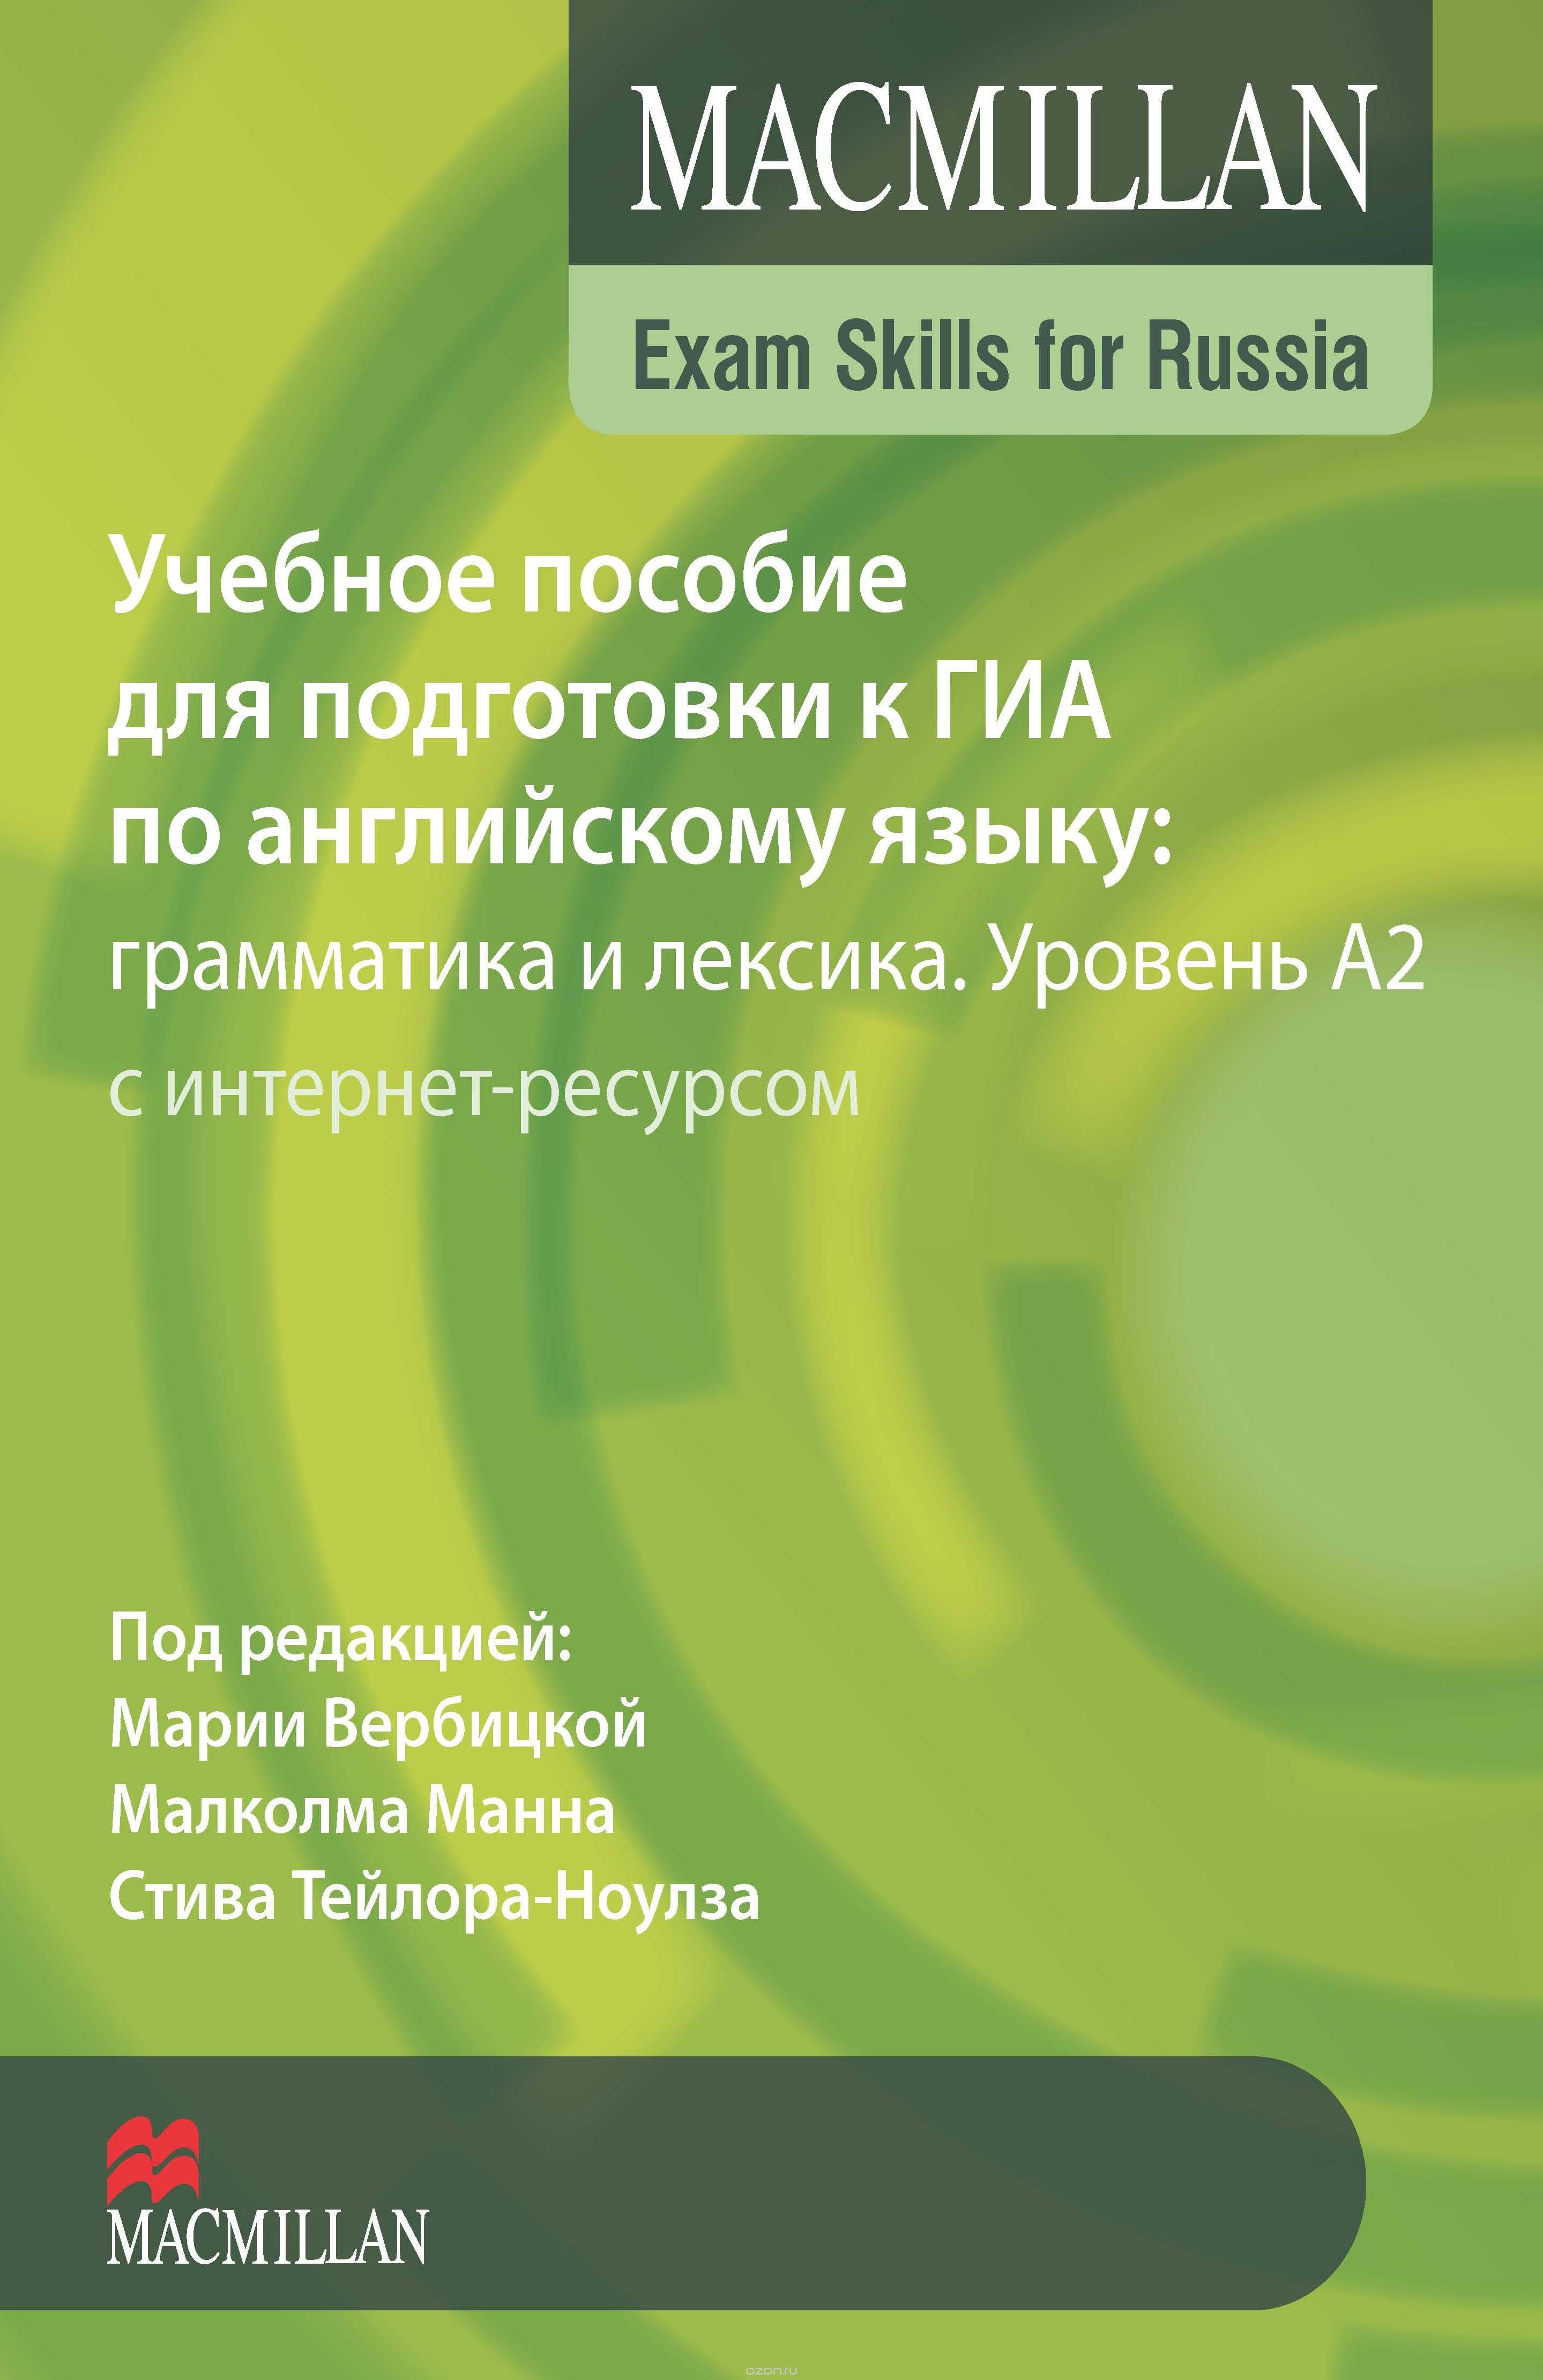 MACMILLAN EXAM SKILLS FOR RUSSIA A2 ГИА : Грамматика и Лексика. Student's Book + Webcode